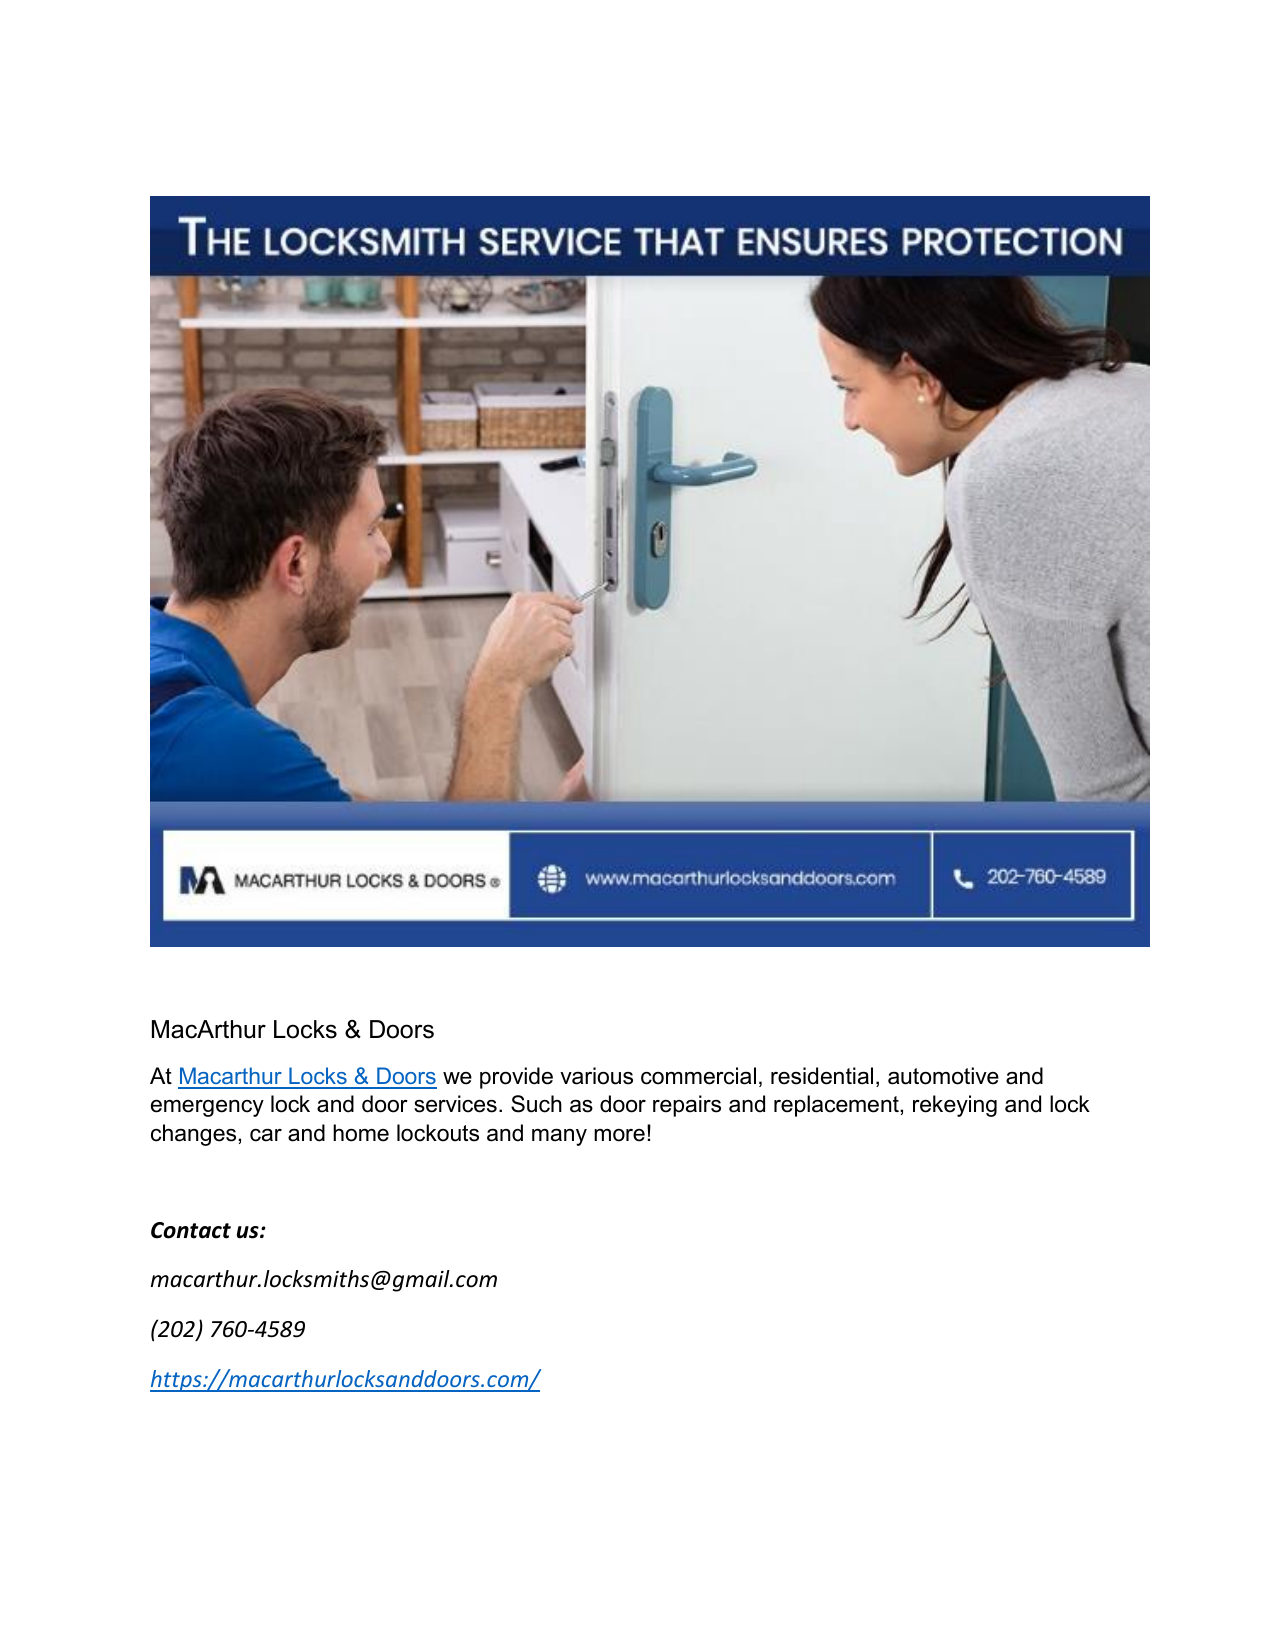 Commercial Locksmith - Locksmiths in Washington Dc